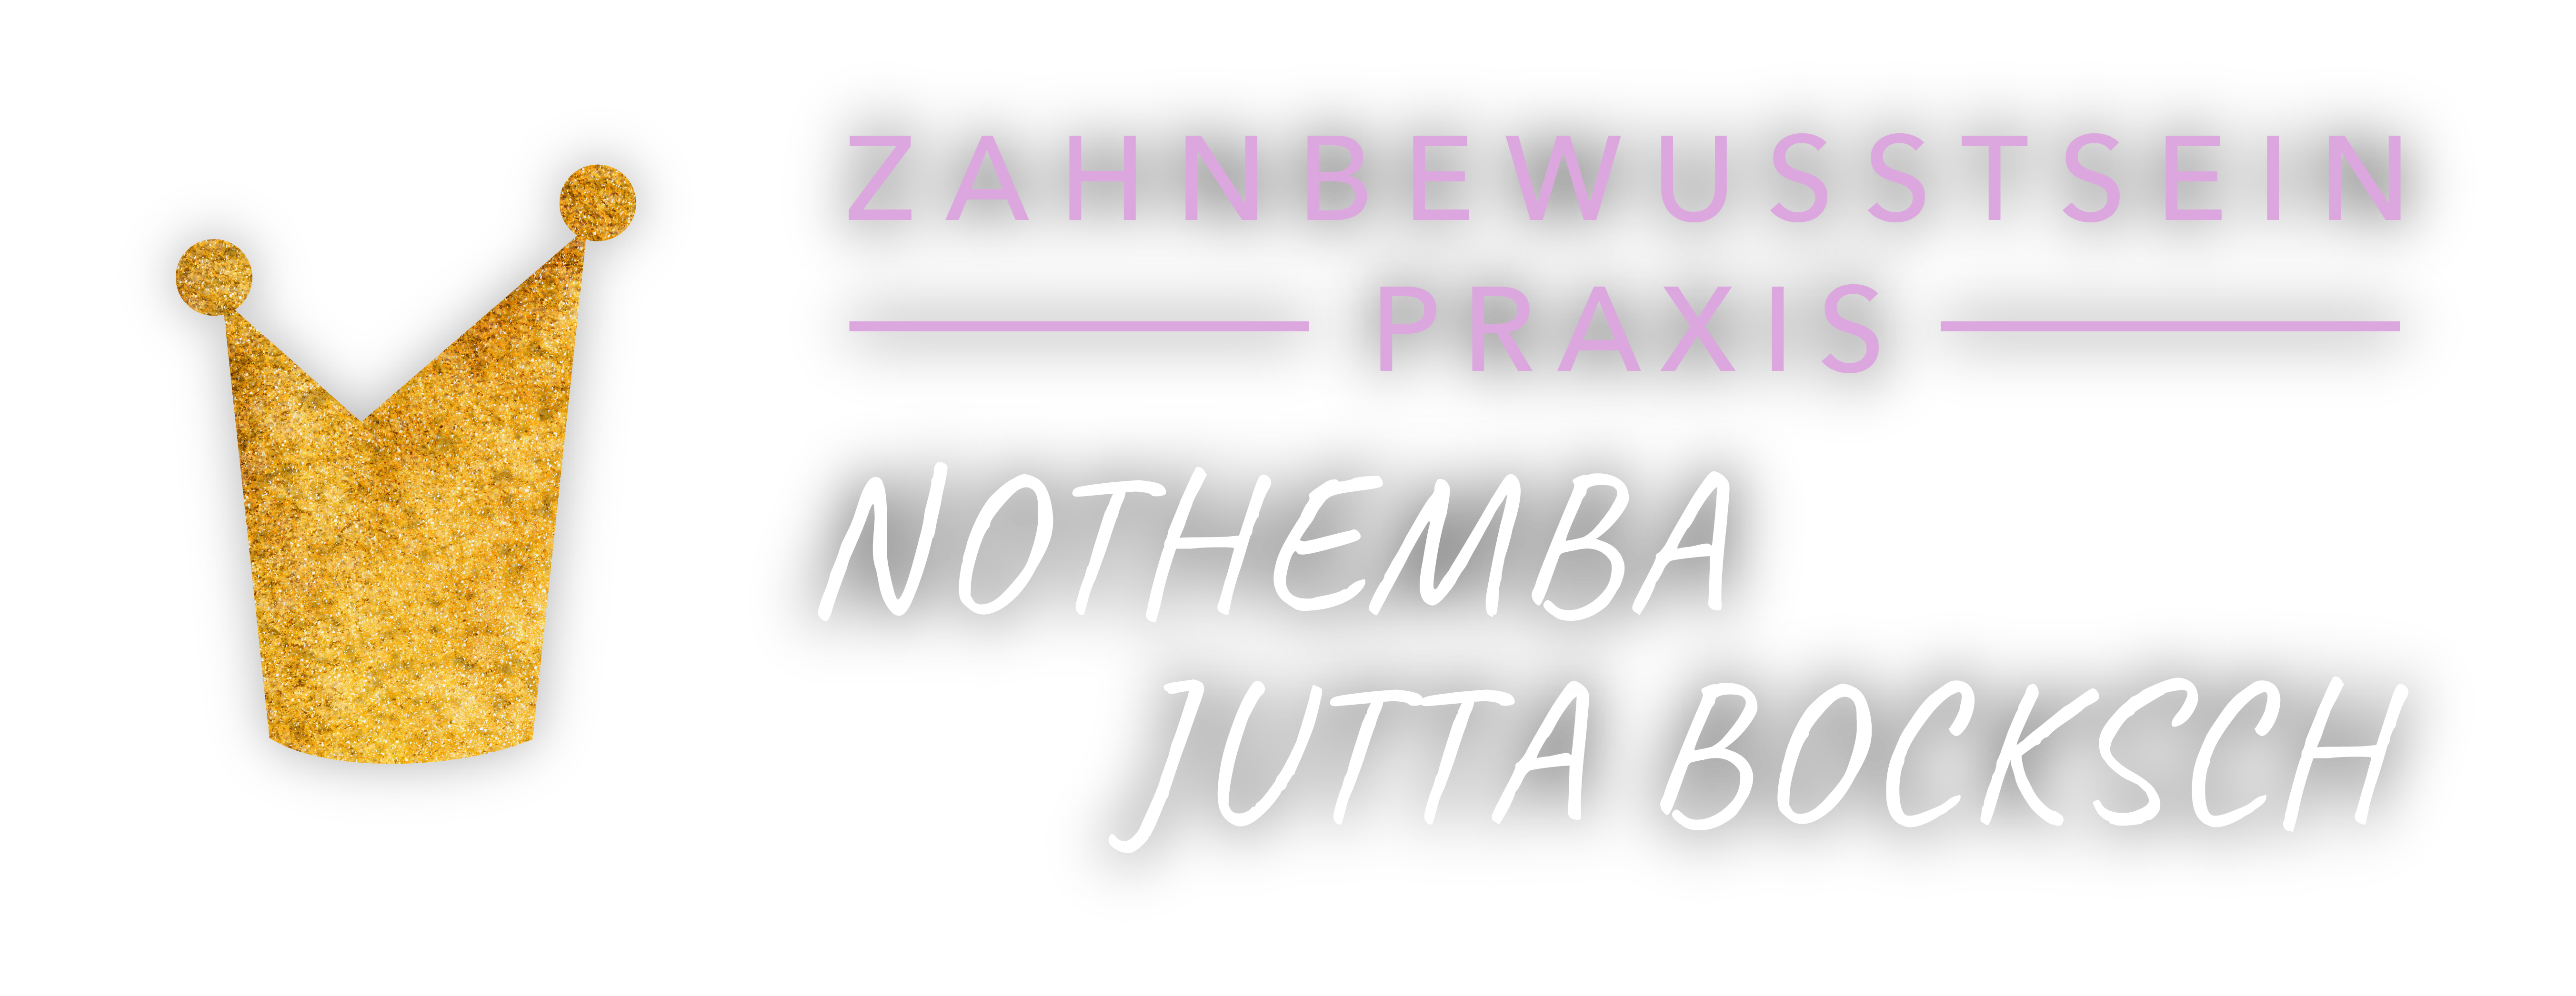 Zahnbewusstsein-Praxis Nothemba Jutta Bocksch